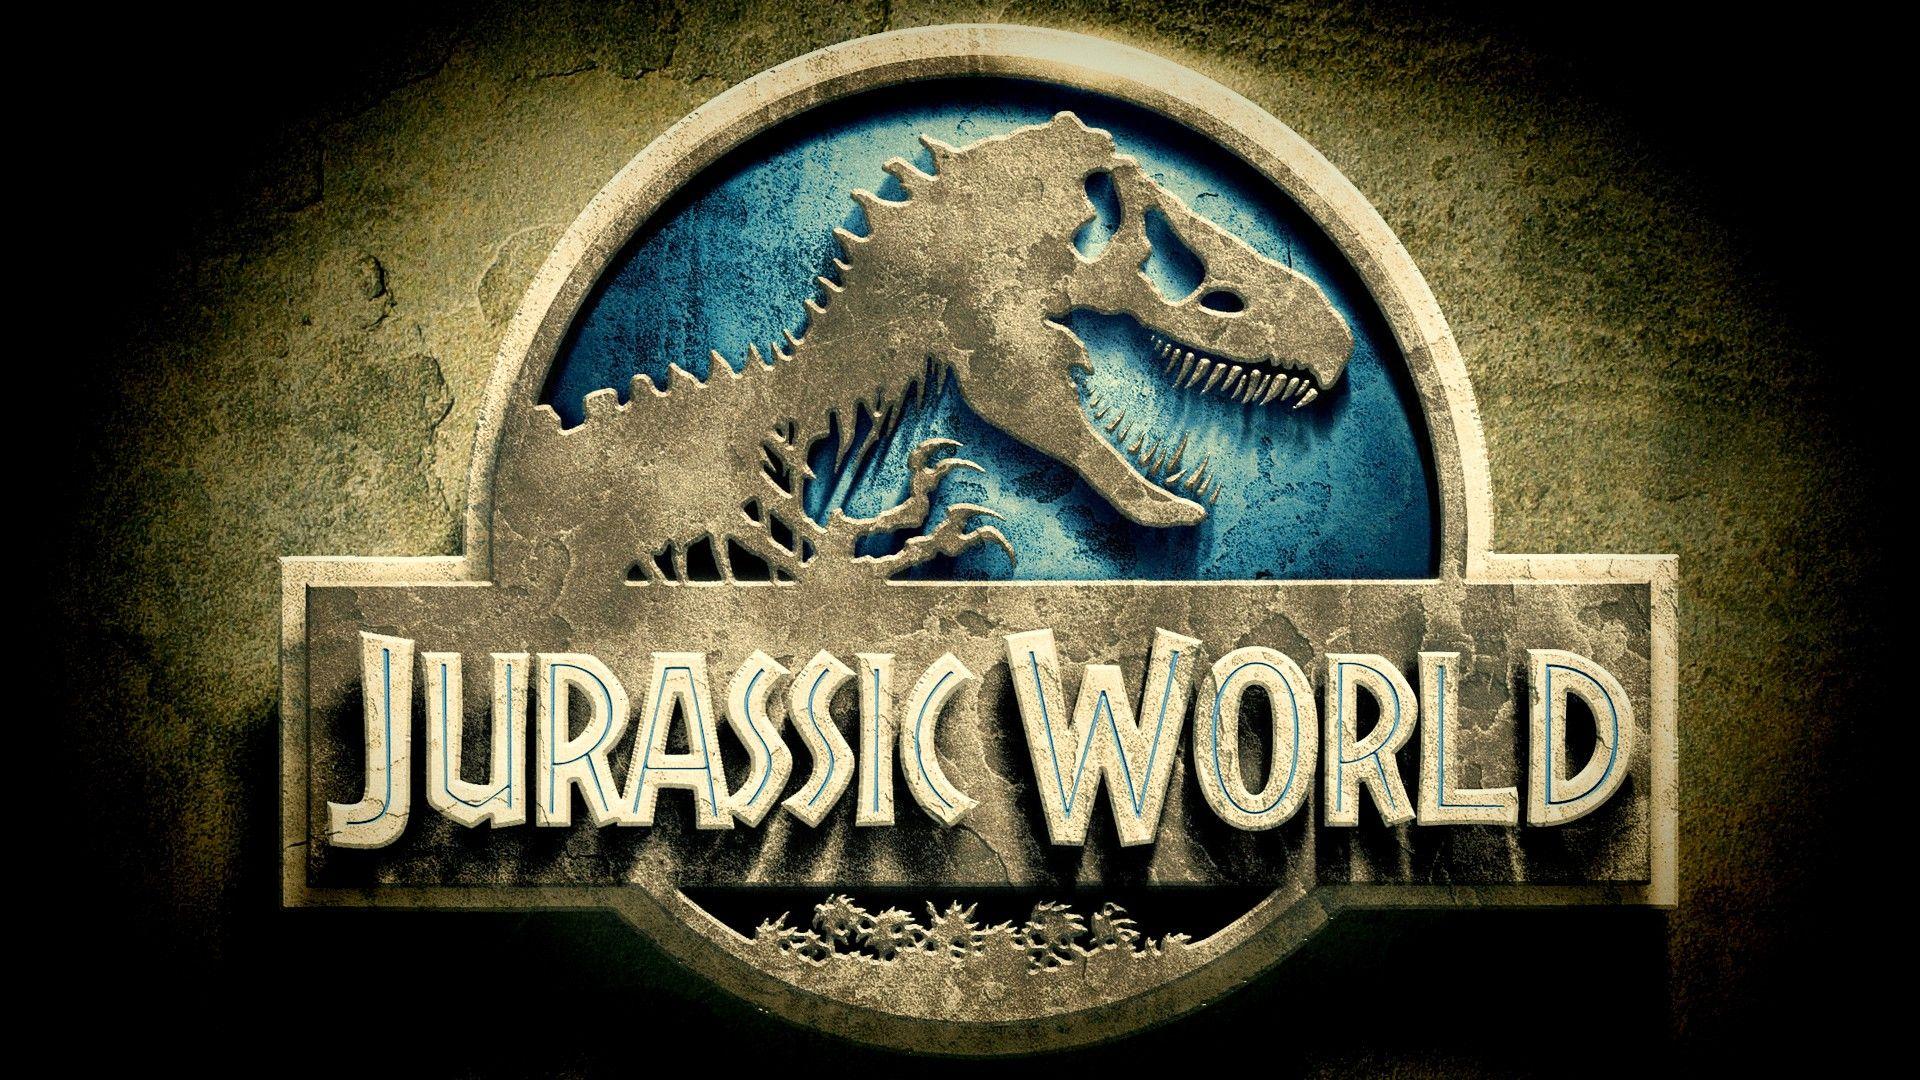 Download Jurassic World Movie Logo Wallpaper 49230 1920x1080 px High Definition Wallpaper